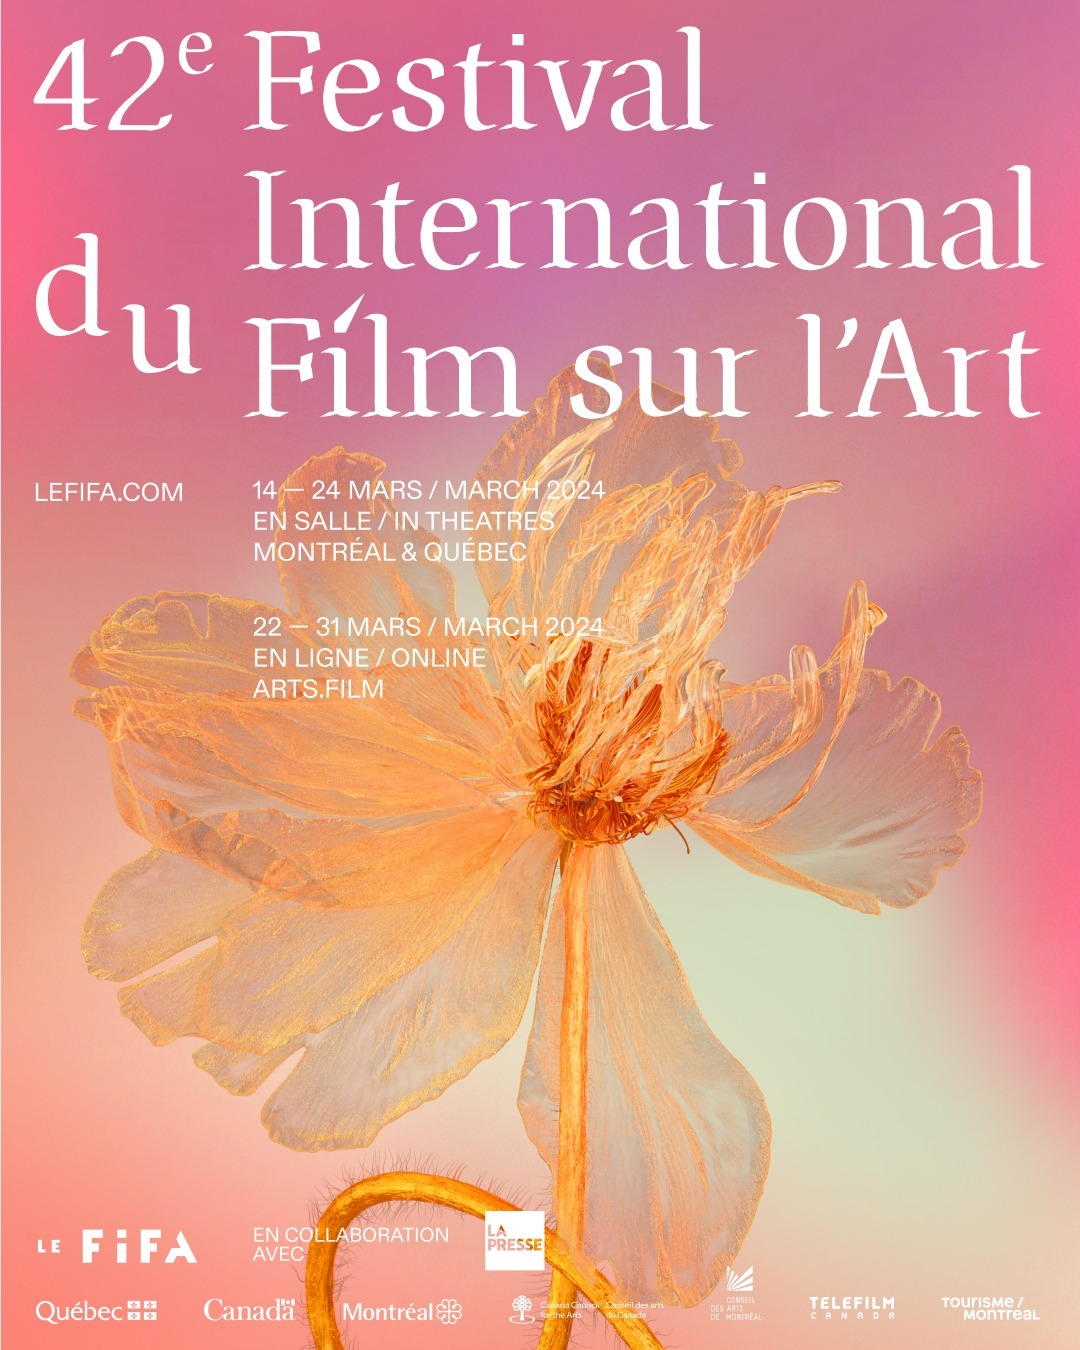 42e Festival International du Film sur l’Art